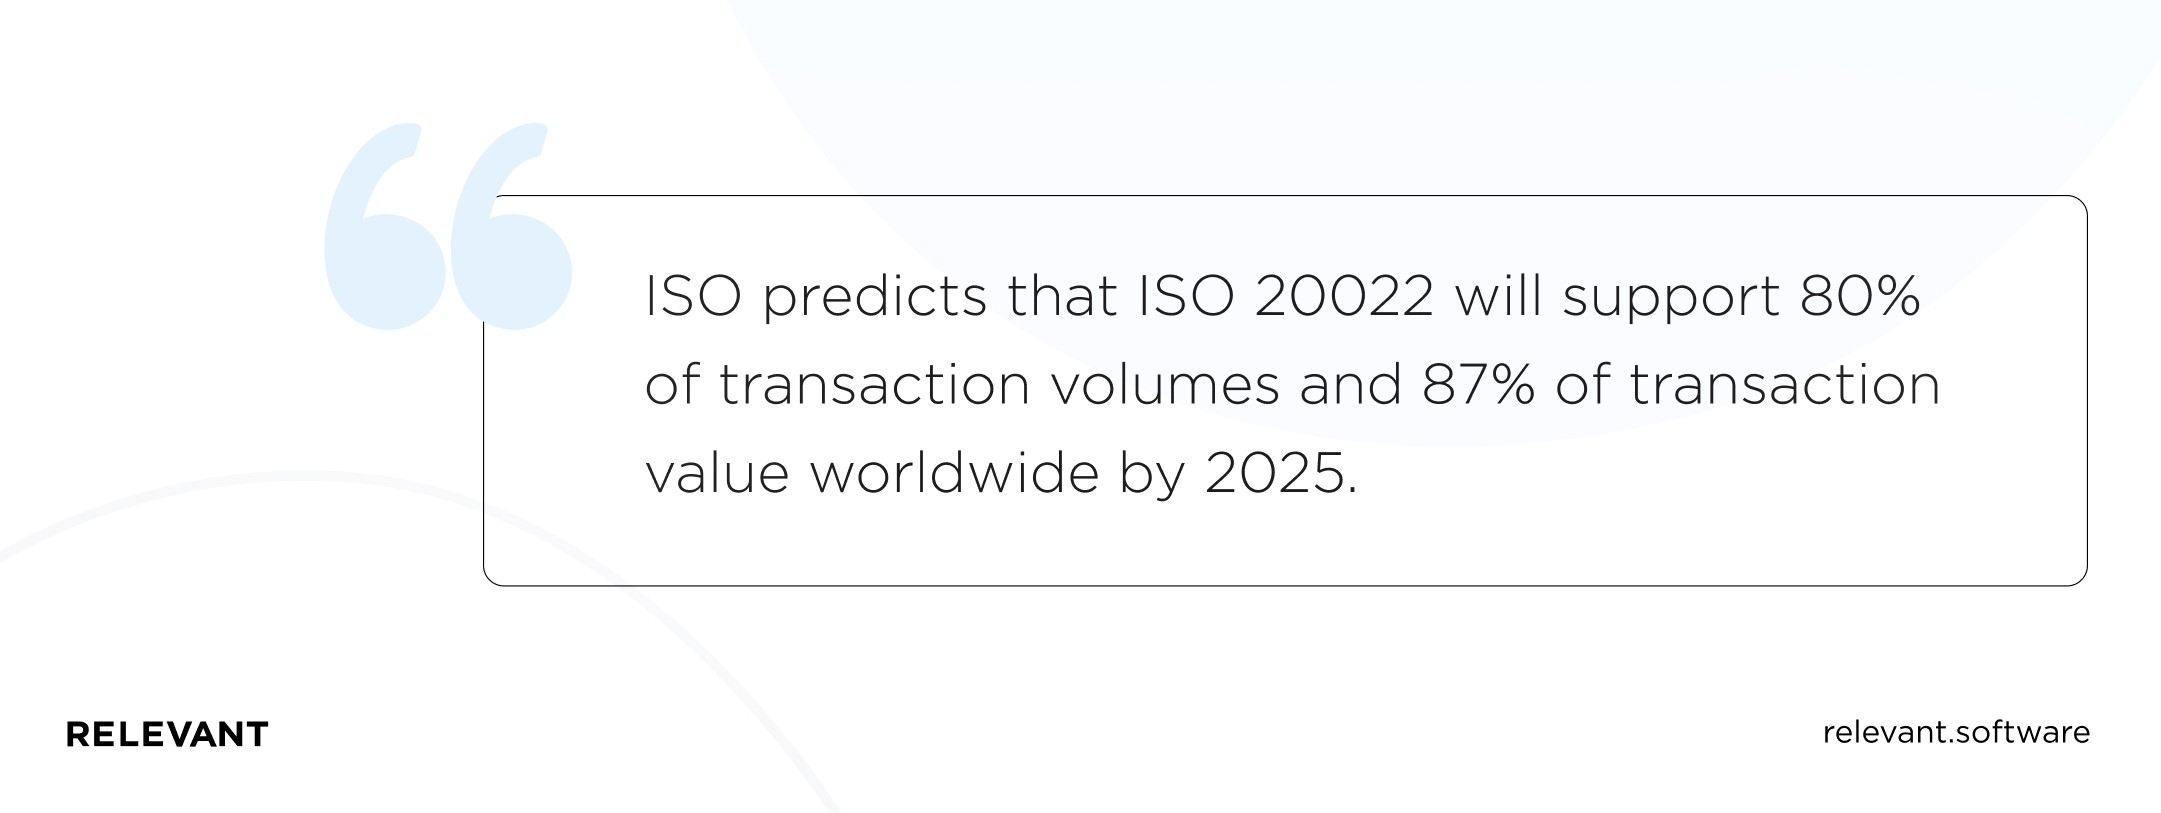 ISO 20022 prediction